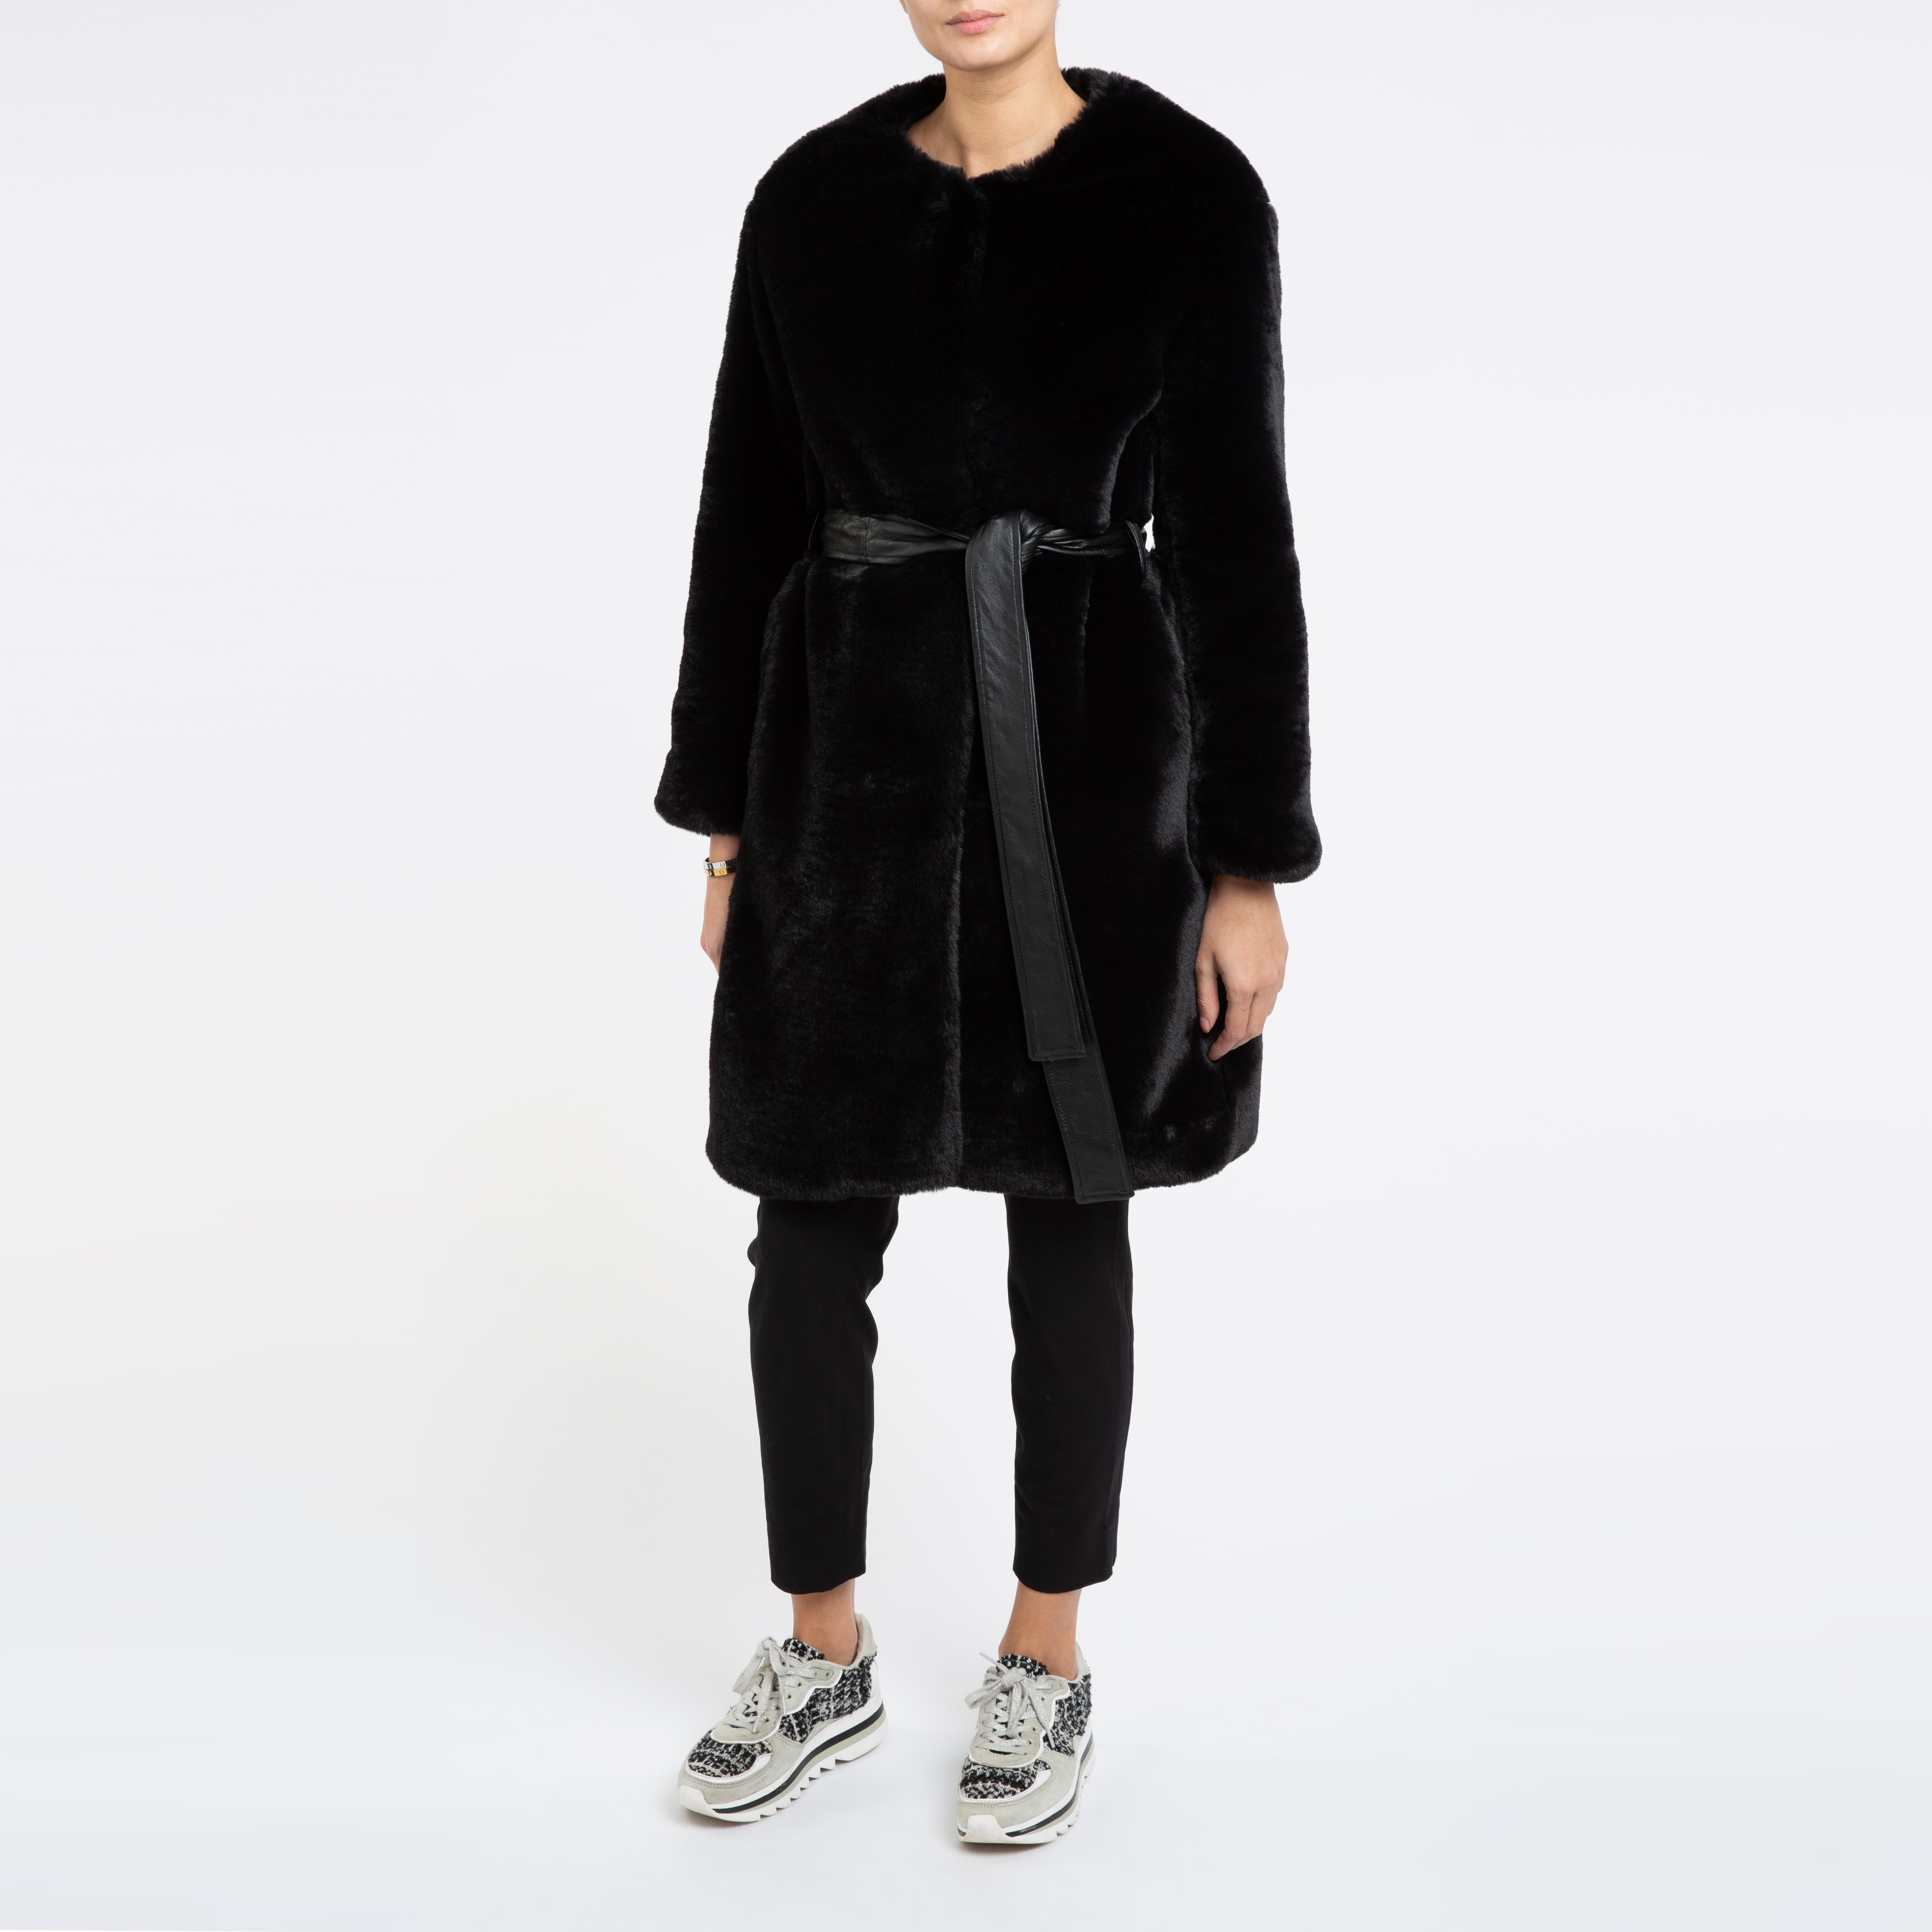 Verheyen London Serena  Collarless Faux Fur Coat in Black - Size uk 8  8